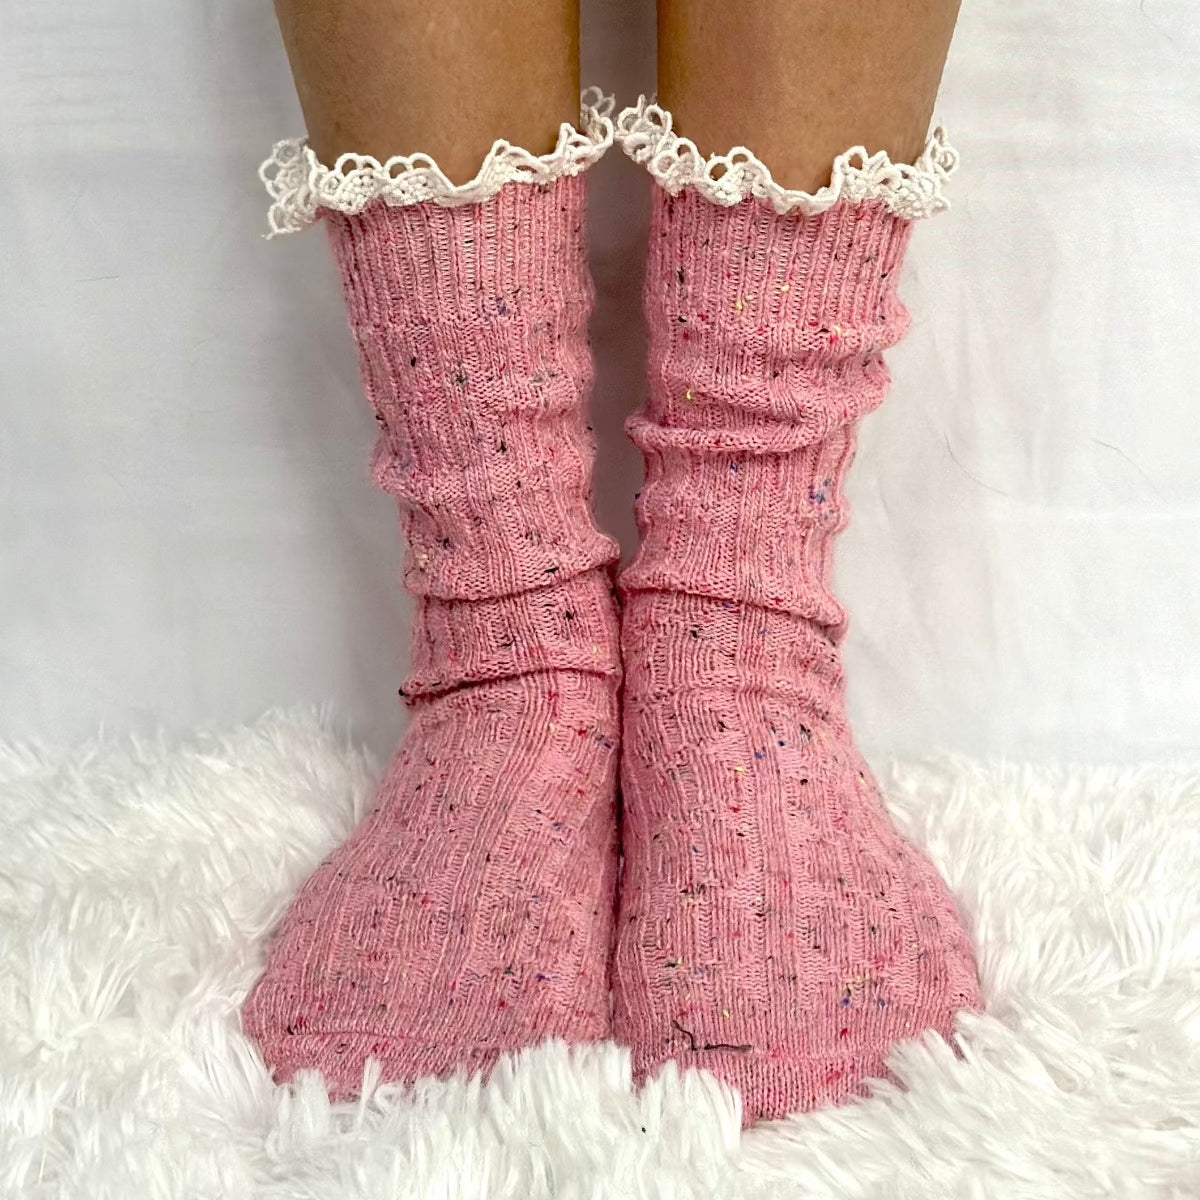 bootie pink tweed lace socks, socks - pink, cute socks for short ankle boots, quality socks women